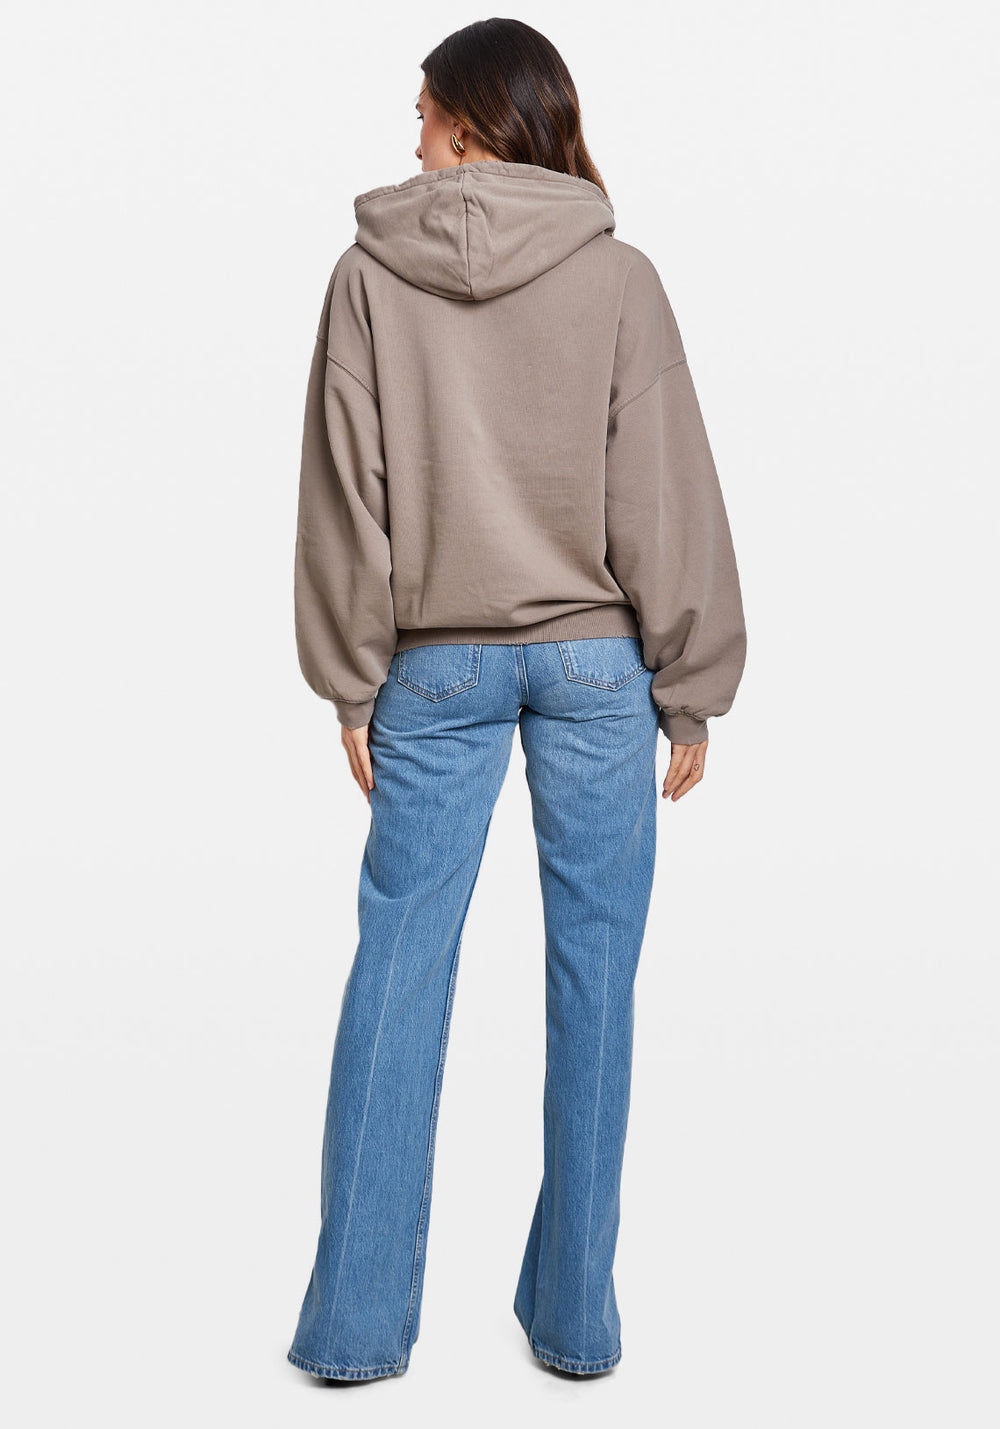 harvey hoodie woman grey in cotton